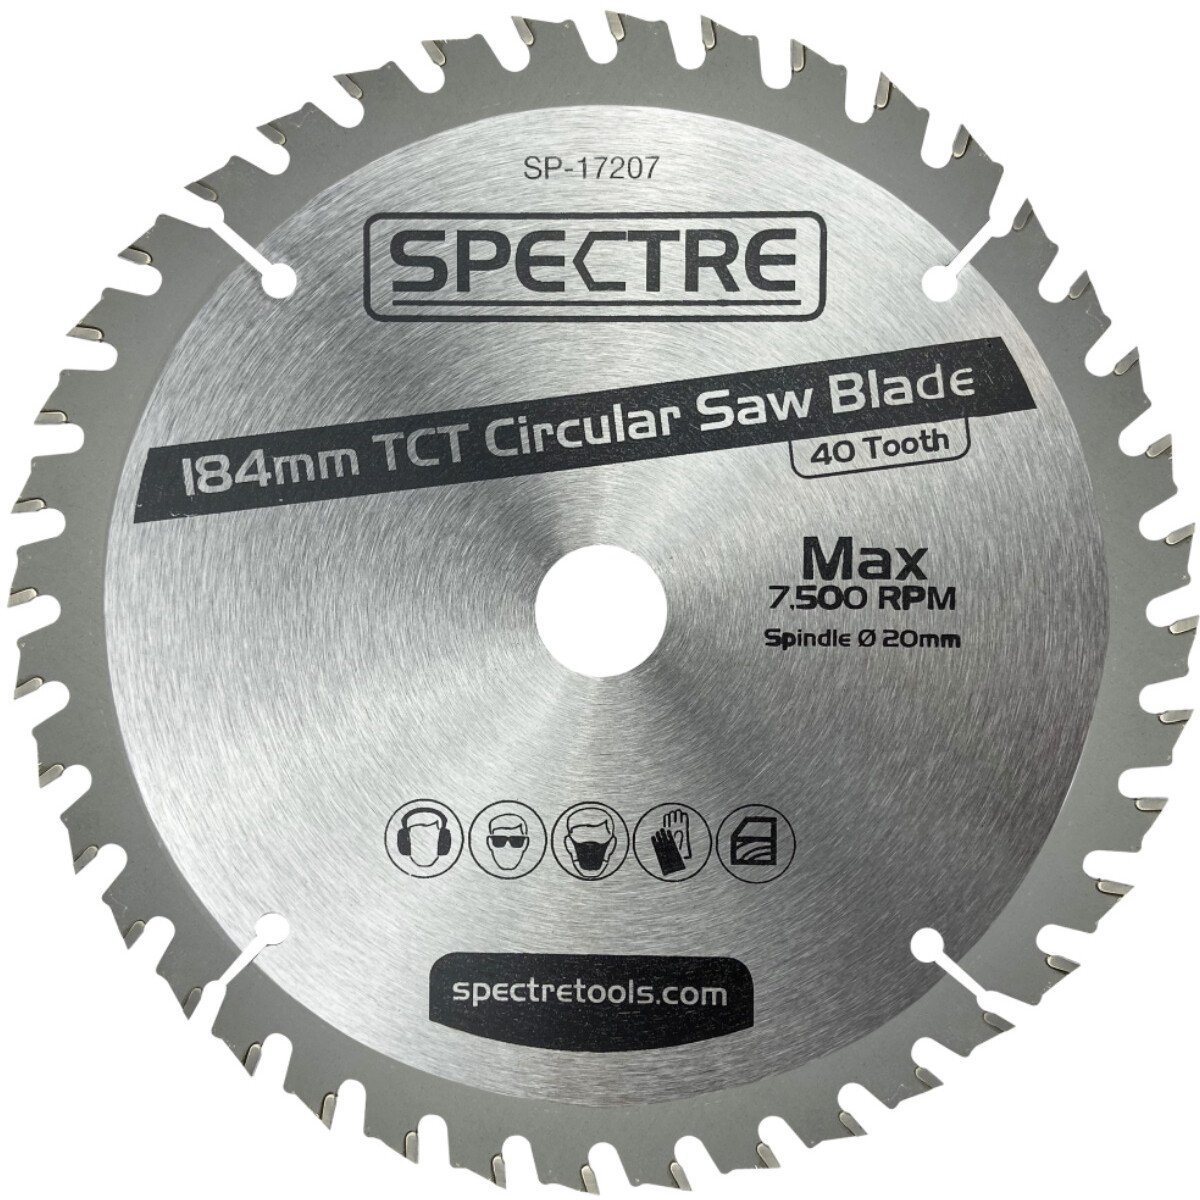 Spectre SP-17207 184 x 20mm 40 Tooth TCT Circular Saw Blade